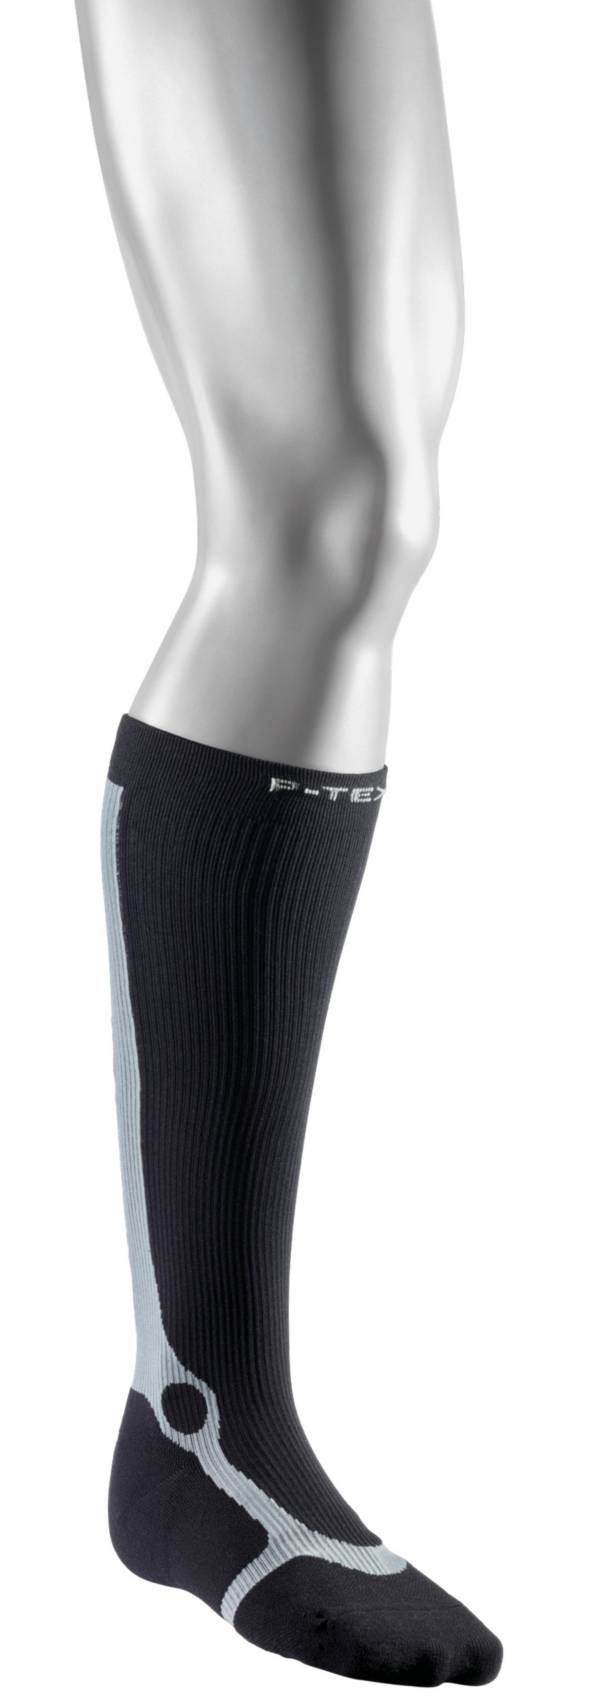 P-TEX Compression Socks | Dick's Sporting Goods